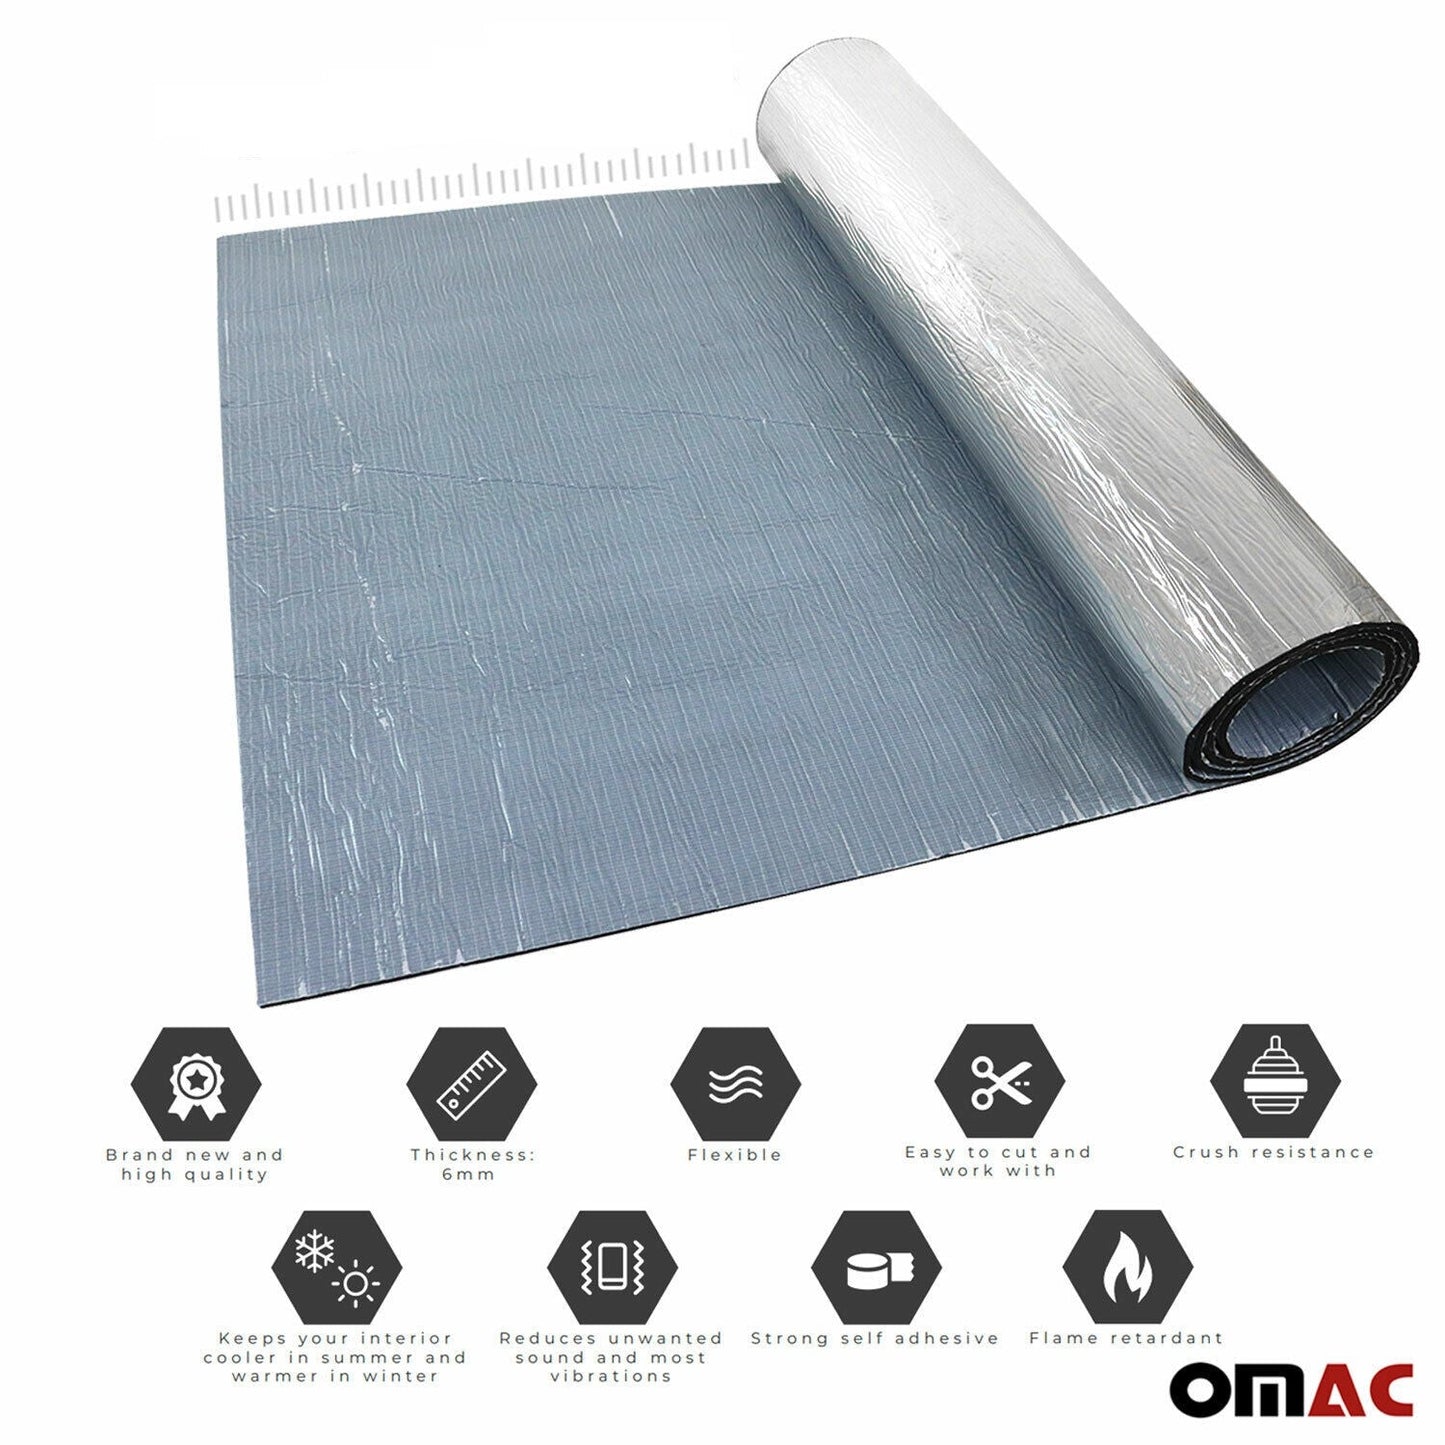 OMAC Heat Shield Thermal Sound Deadening Insulation Noise Proof 78,7"x39,4"*0,23 U022131